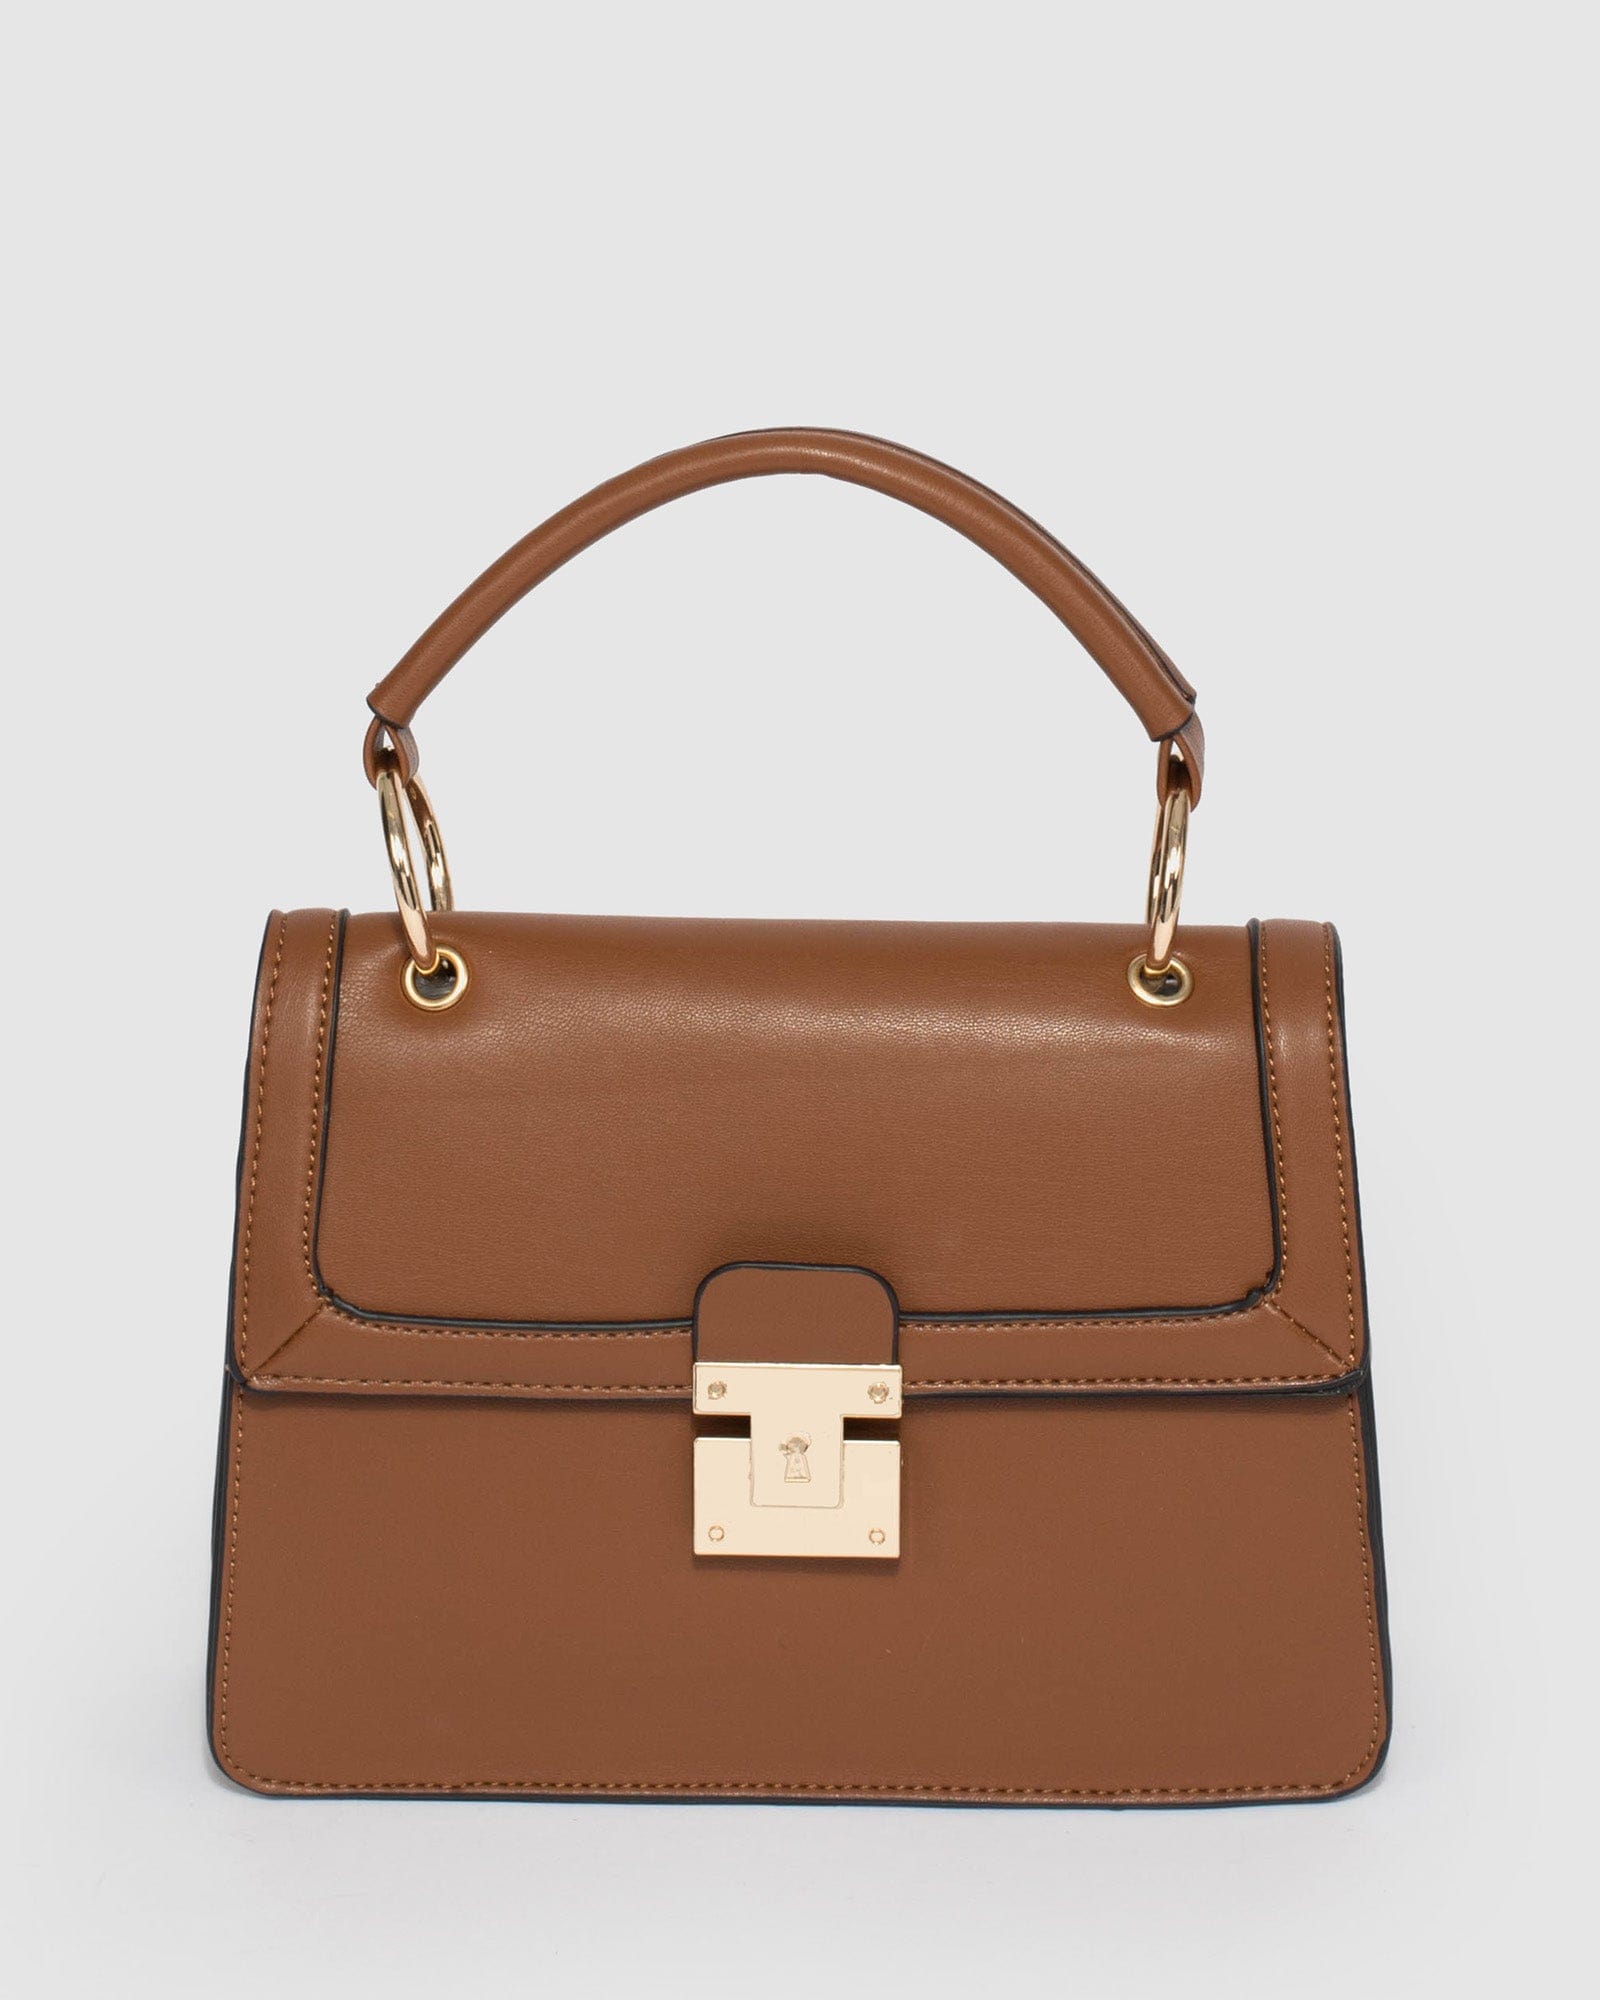 COLETTE by Colette Hayman Black & Cream Tote handbag | Cream tote, Tote  handbags, Handbag